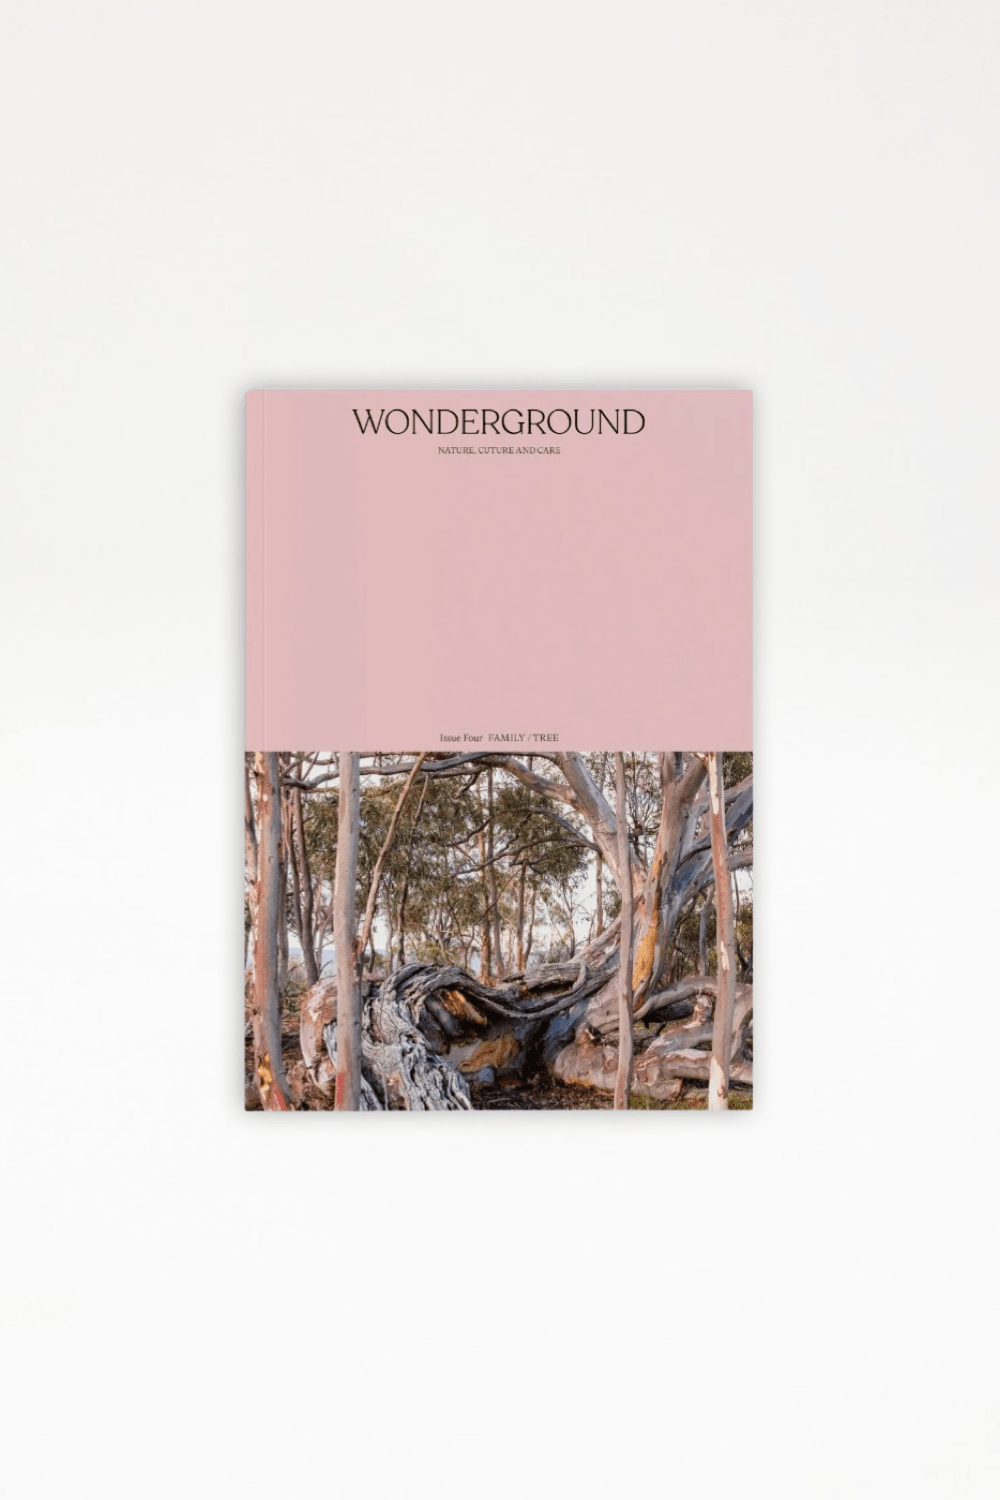 Wonderground Publication Issue 04 - Ensemble Studios